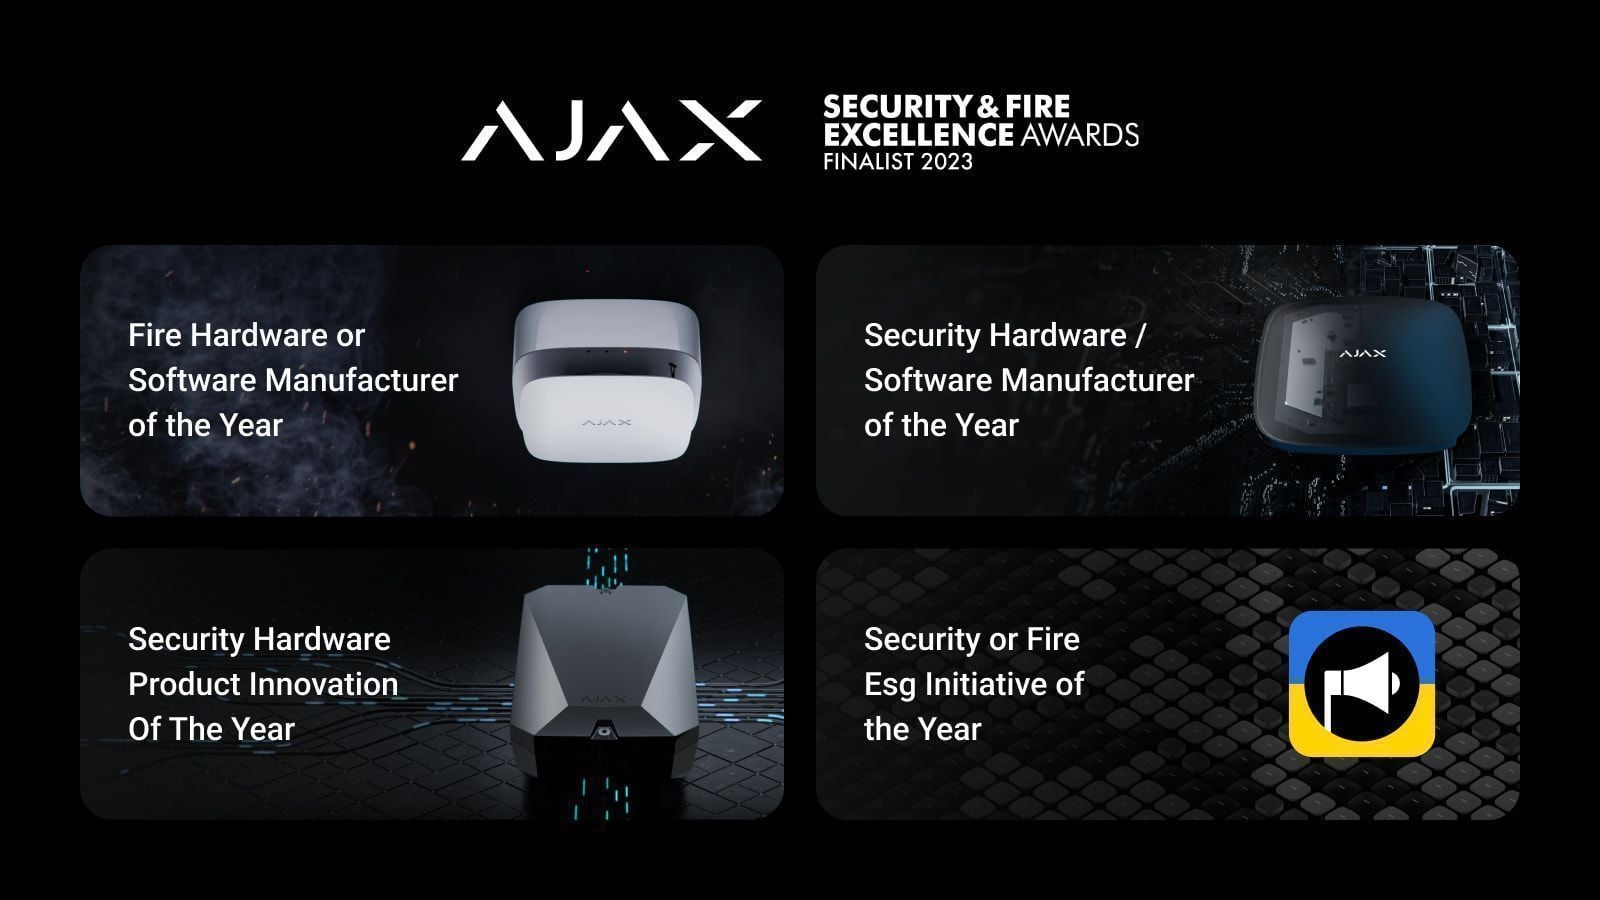 Ajax Systems został finalistą w 4 kategoriach nagród Security & Fire Excellence Awards 2023